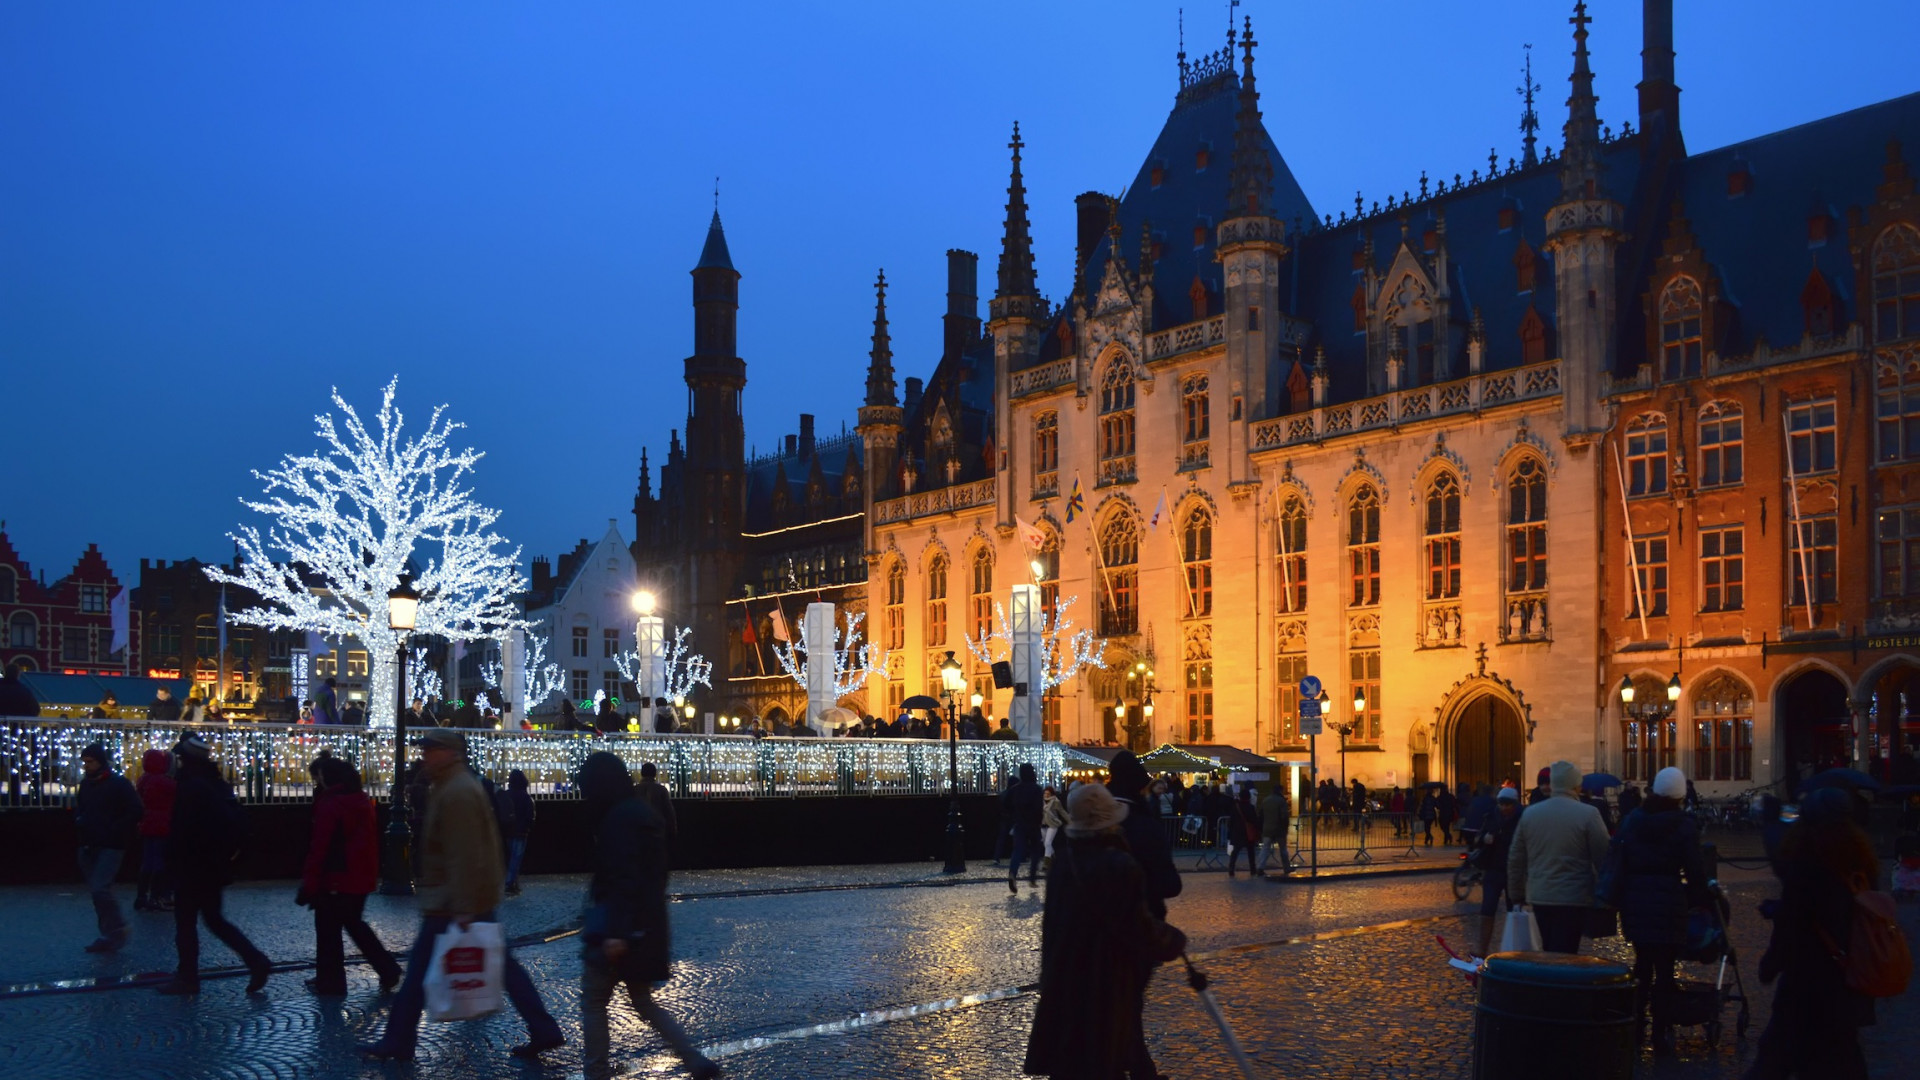 Bruges Christmas Market, Belgium